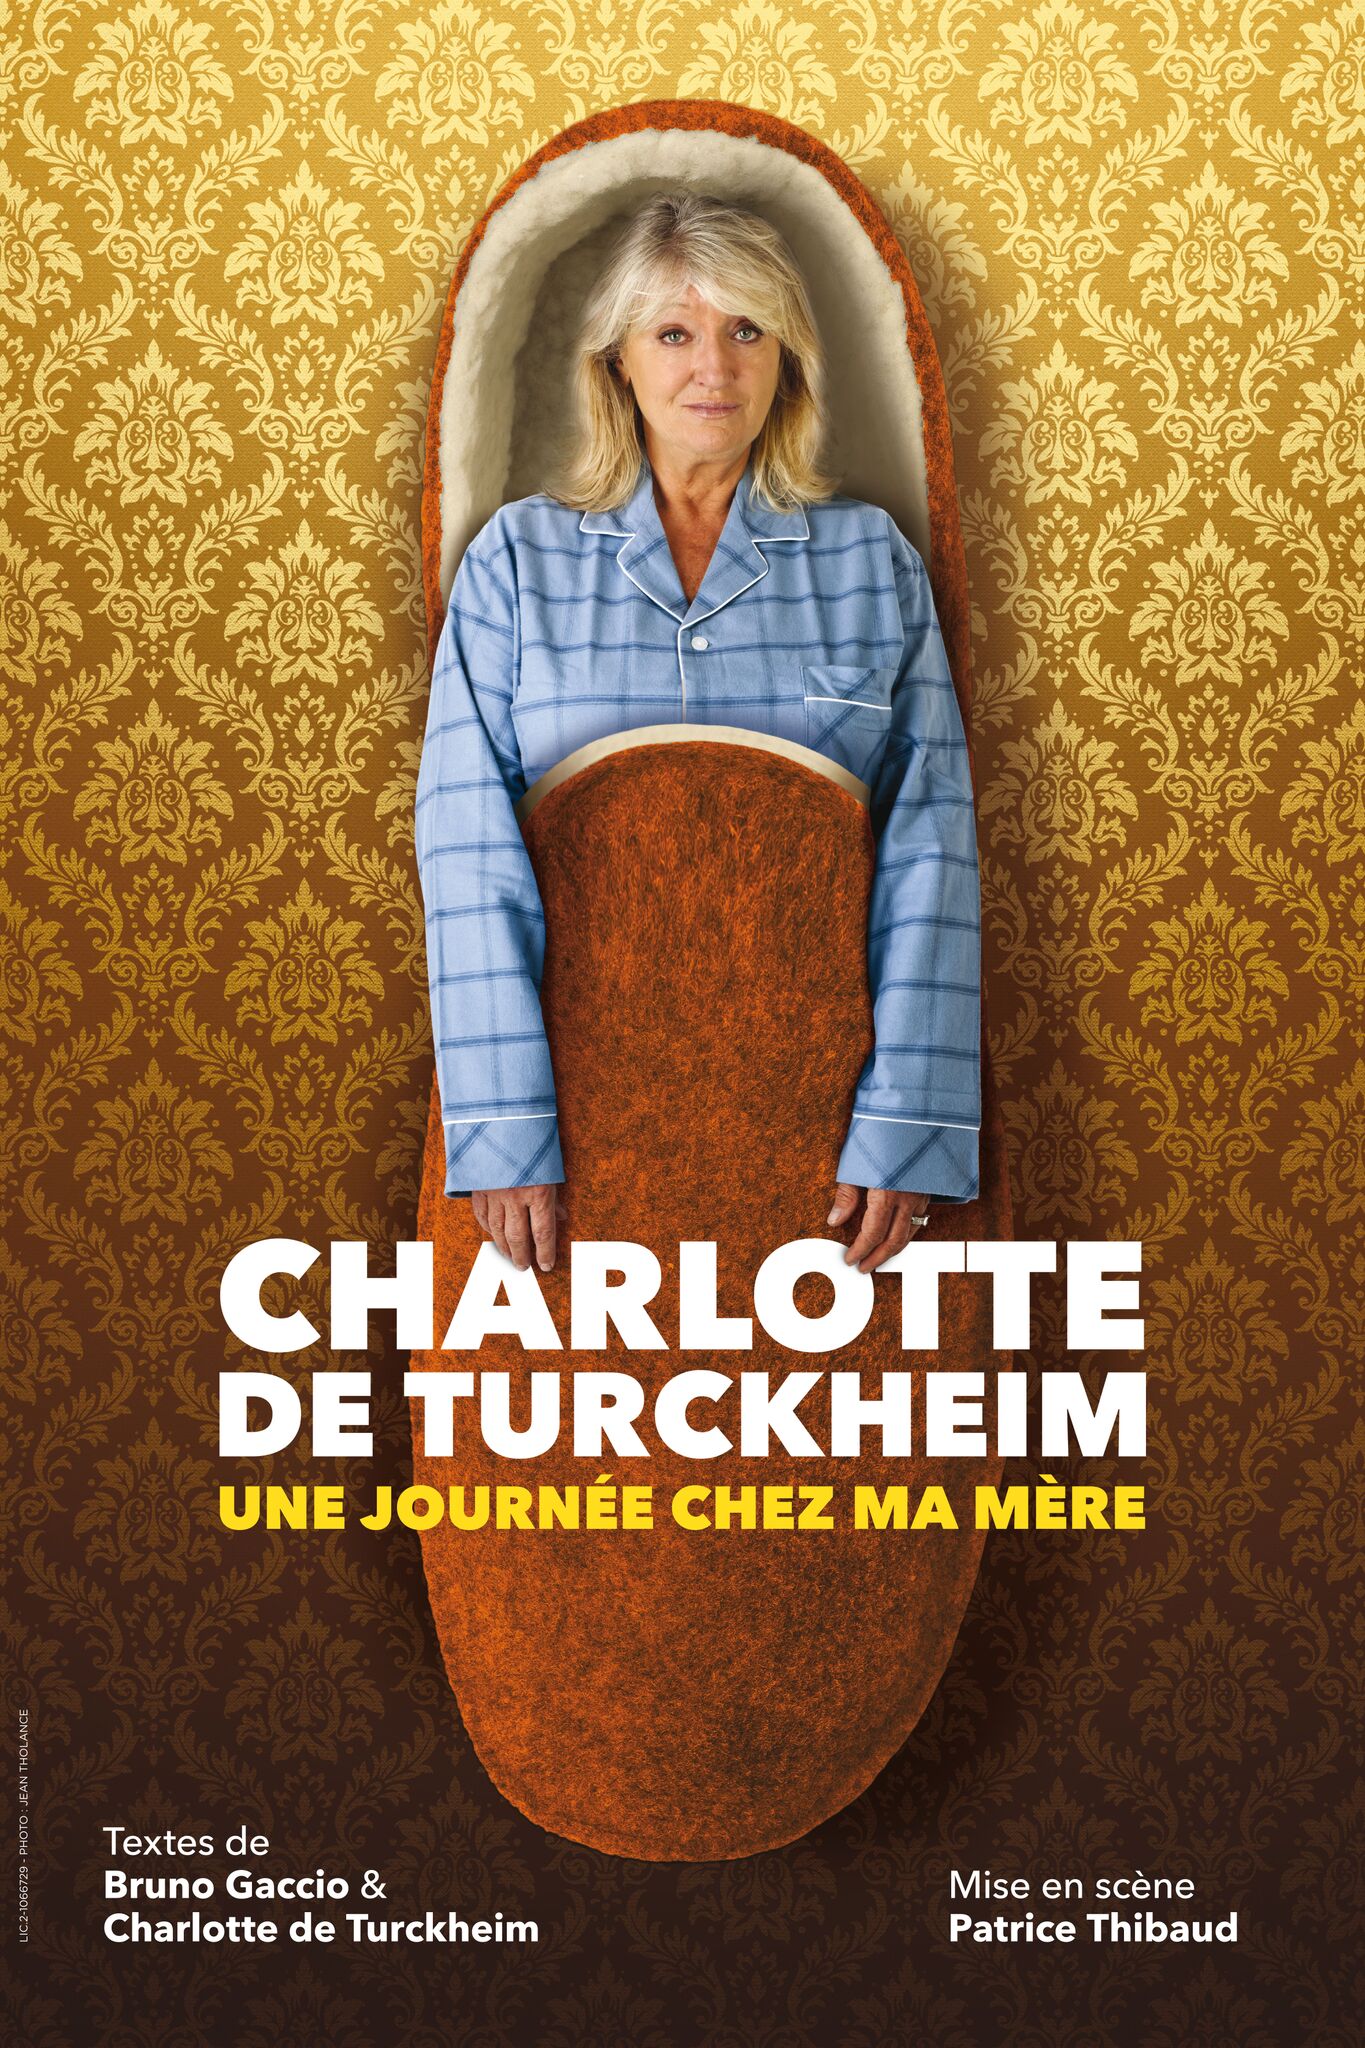 Charlotte de Turckheim